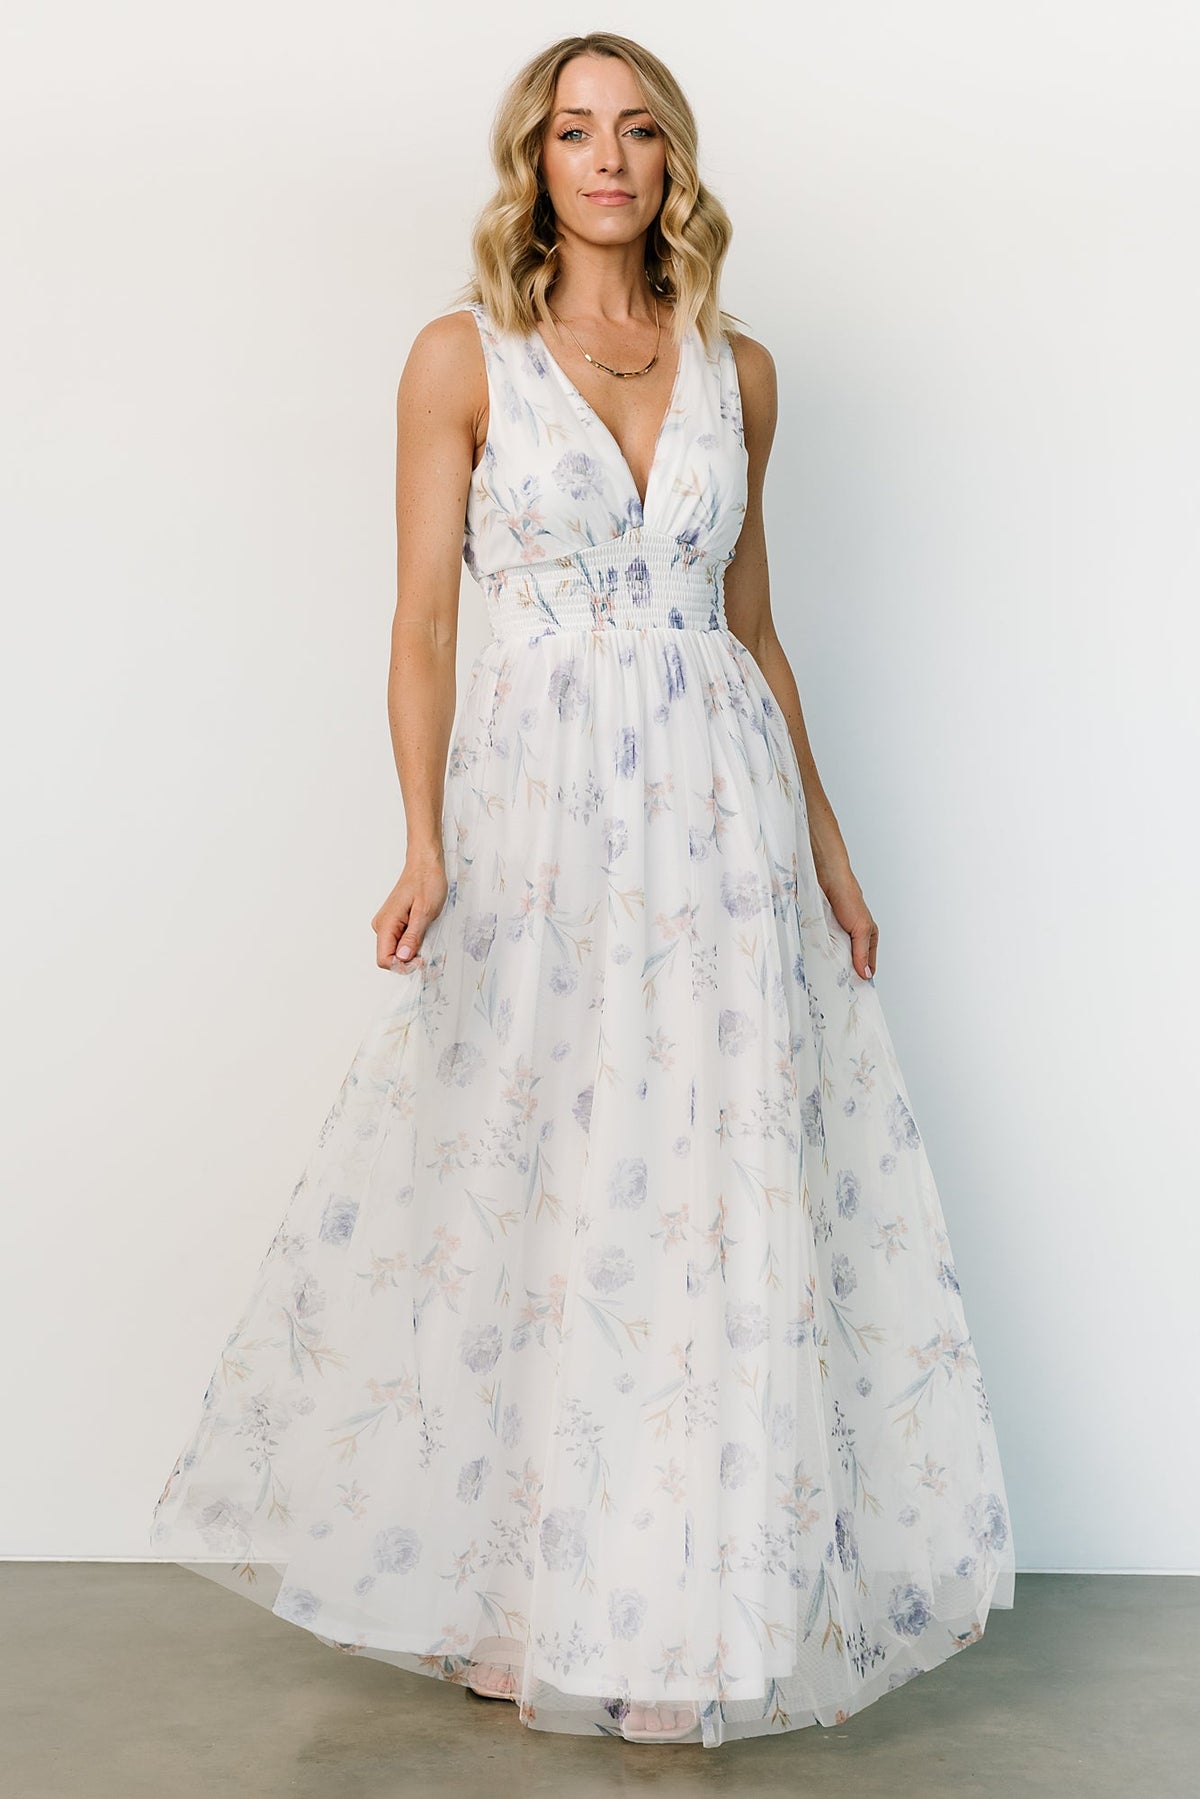 Buy Rare White Floral Print Maxi Dress for Women's Online @ Tata CLiQ